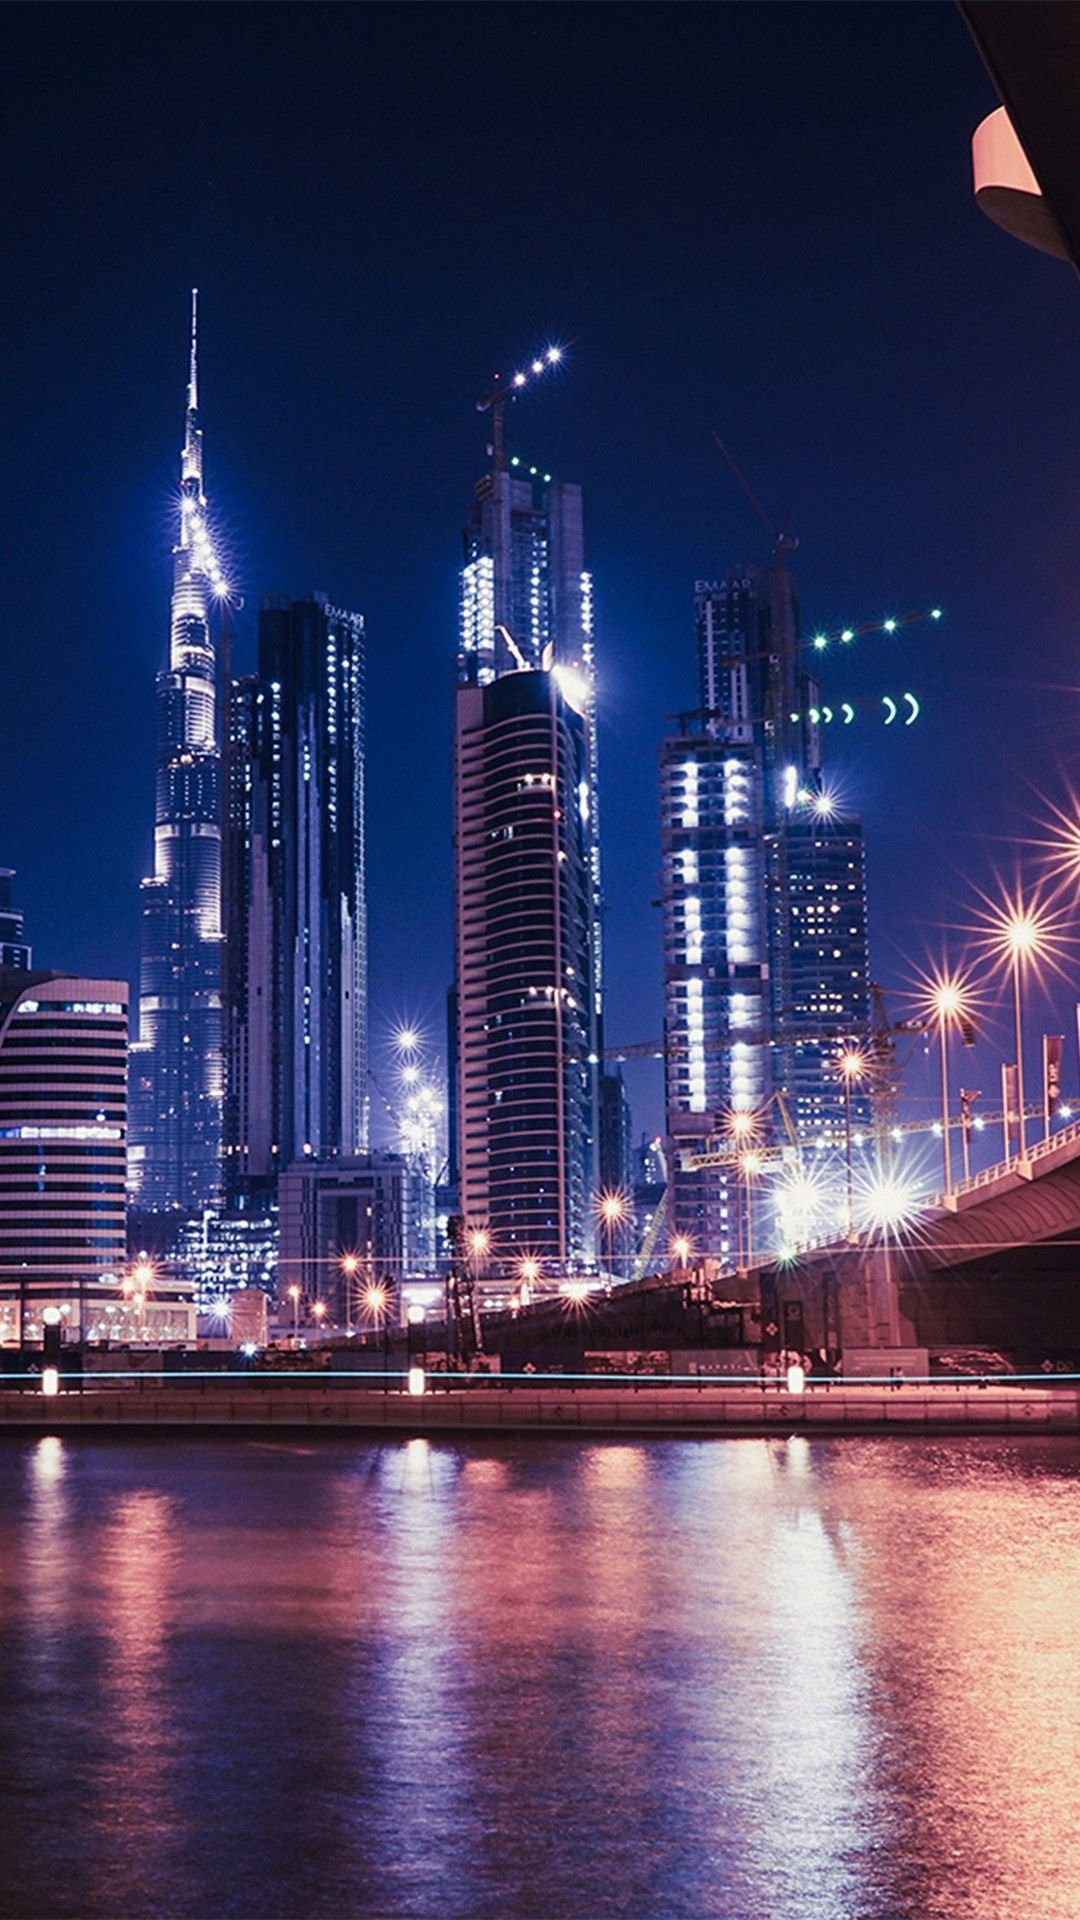 Dubai Night Bridge view